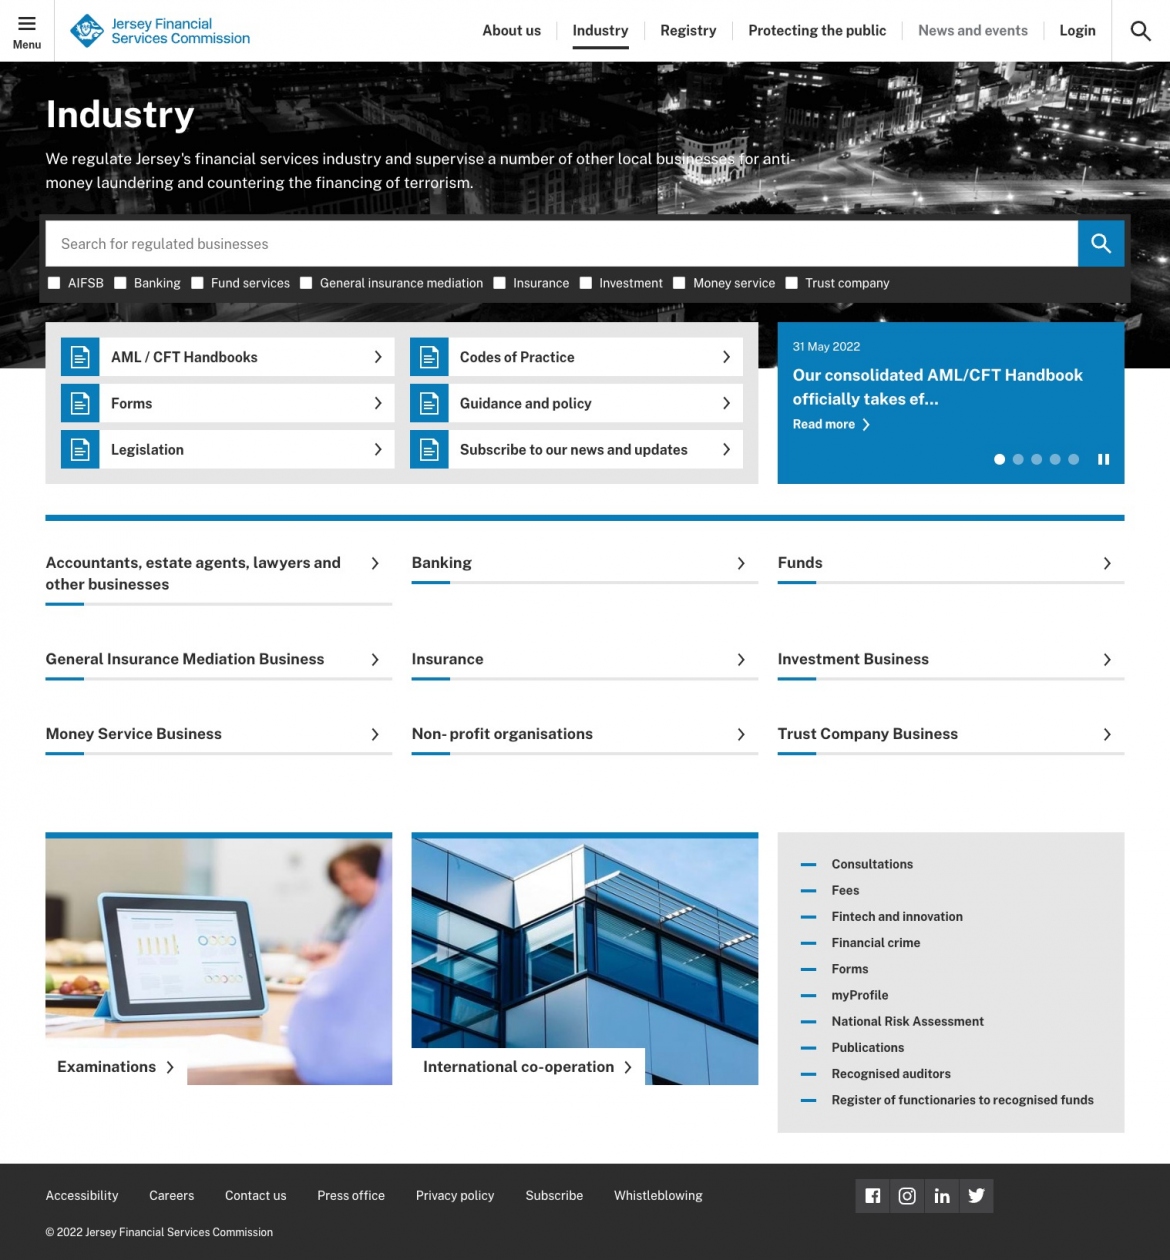 JFSC website screenshot of industry section